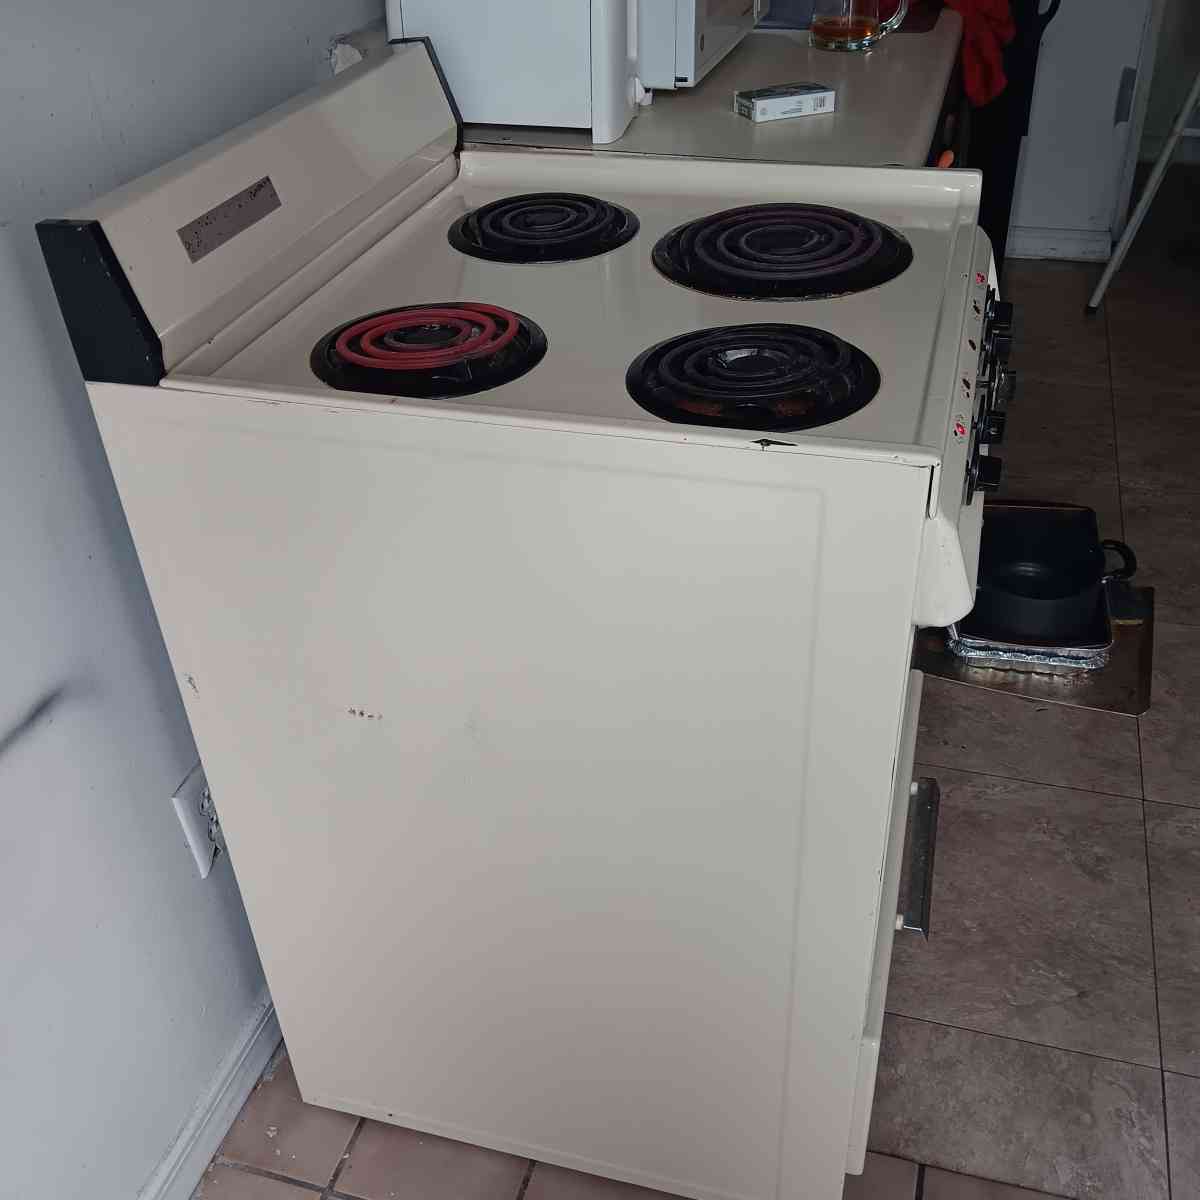 Oven stove small for studio or small area